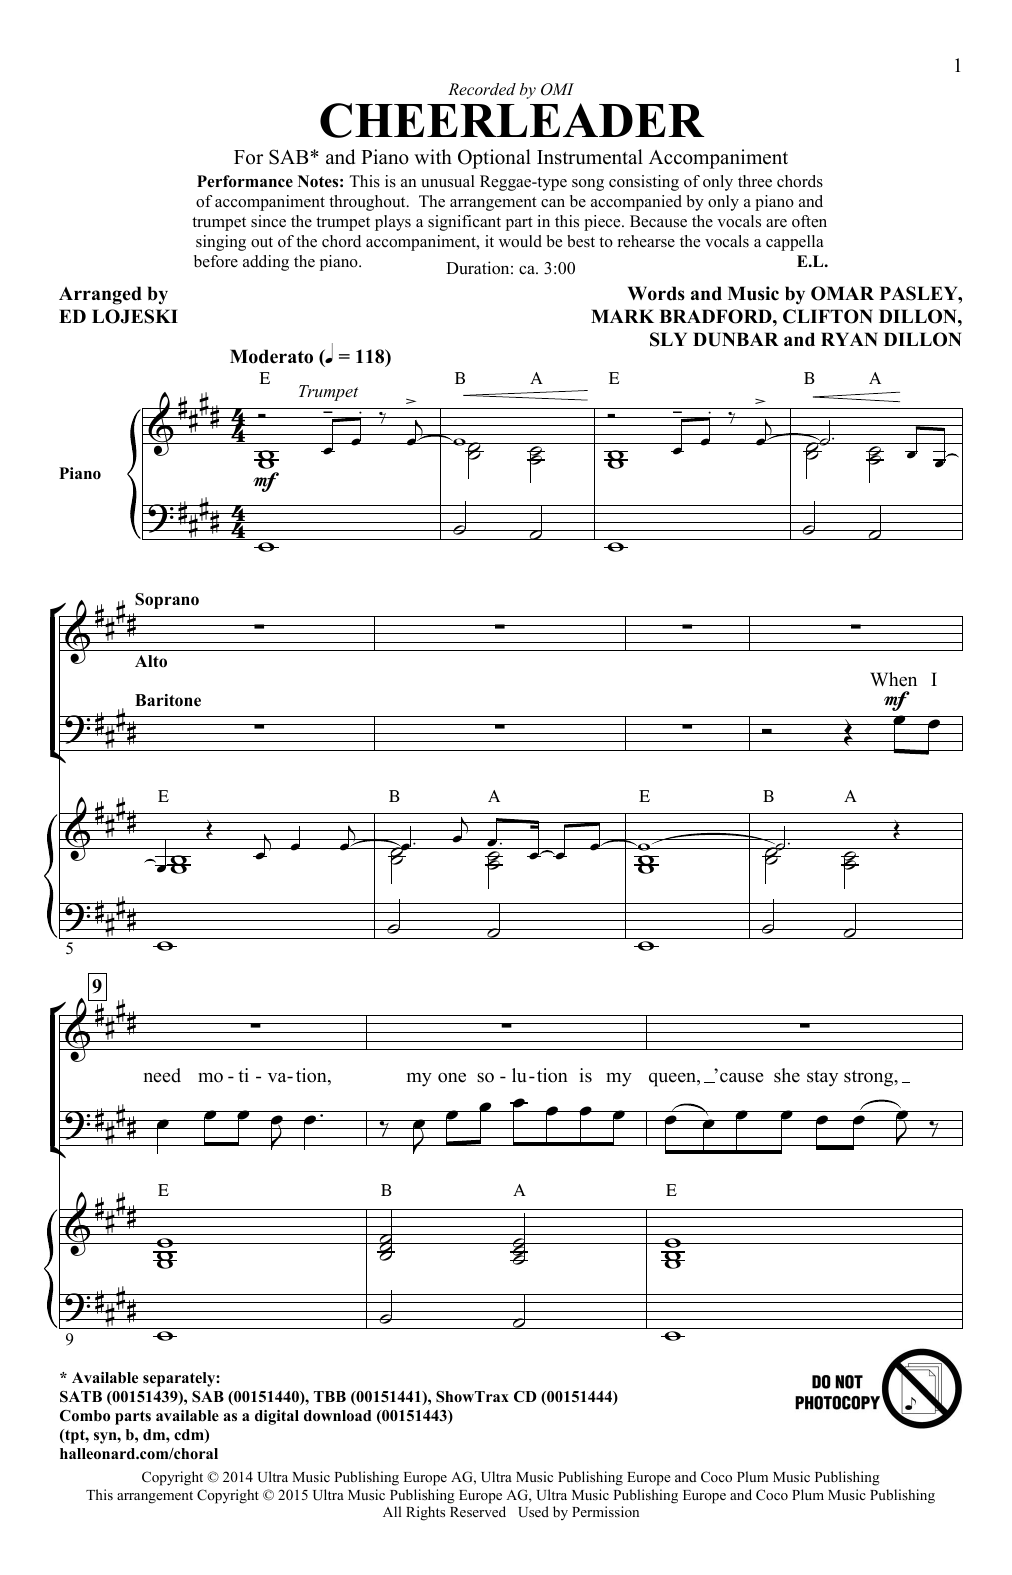 Omi Cheerleader (arr. Ed Lojeski) sheet music notes and chords arranged for SATB Choir